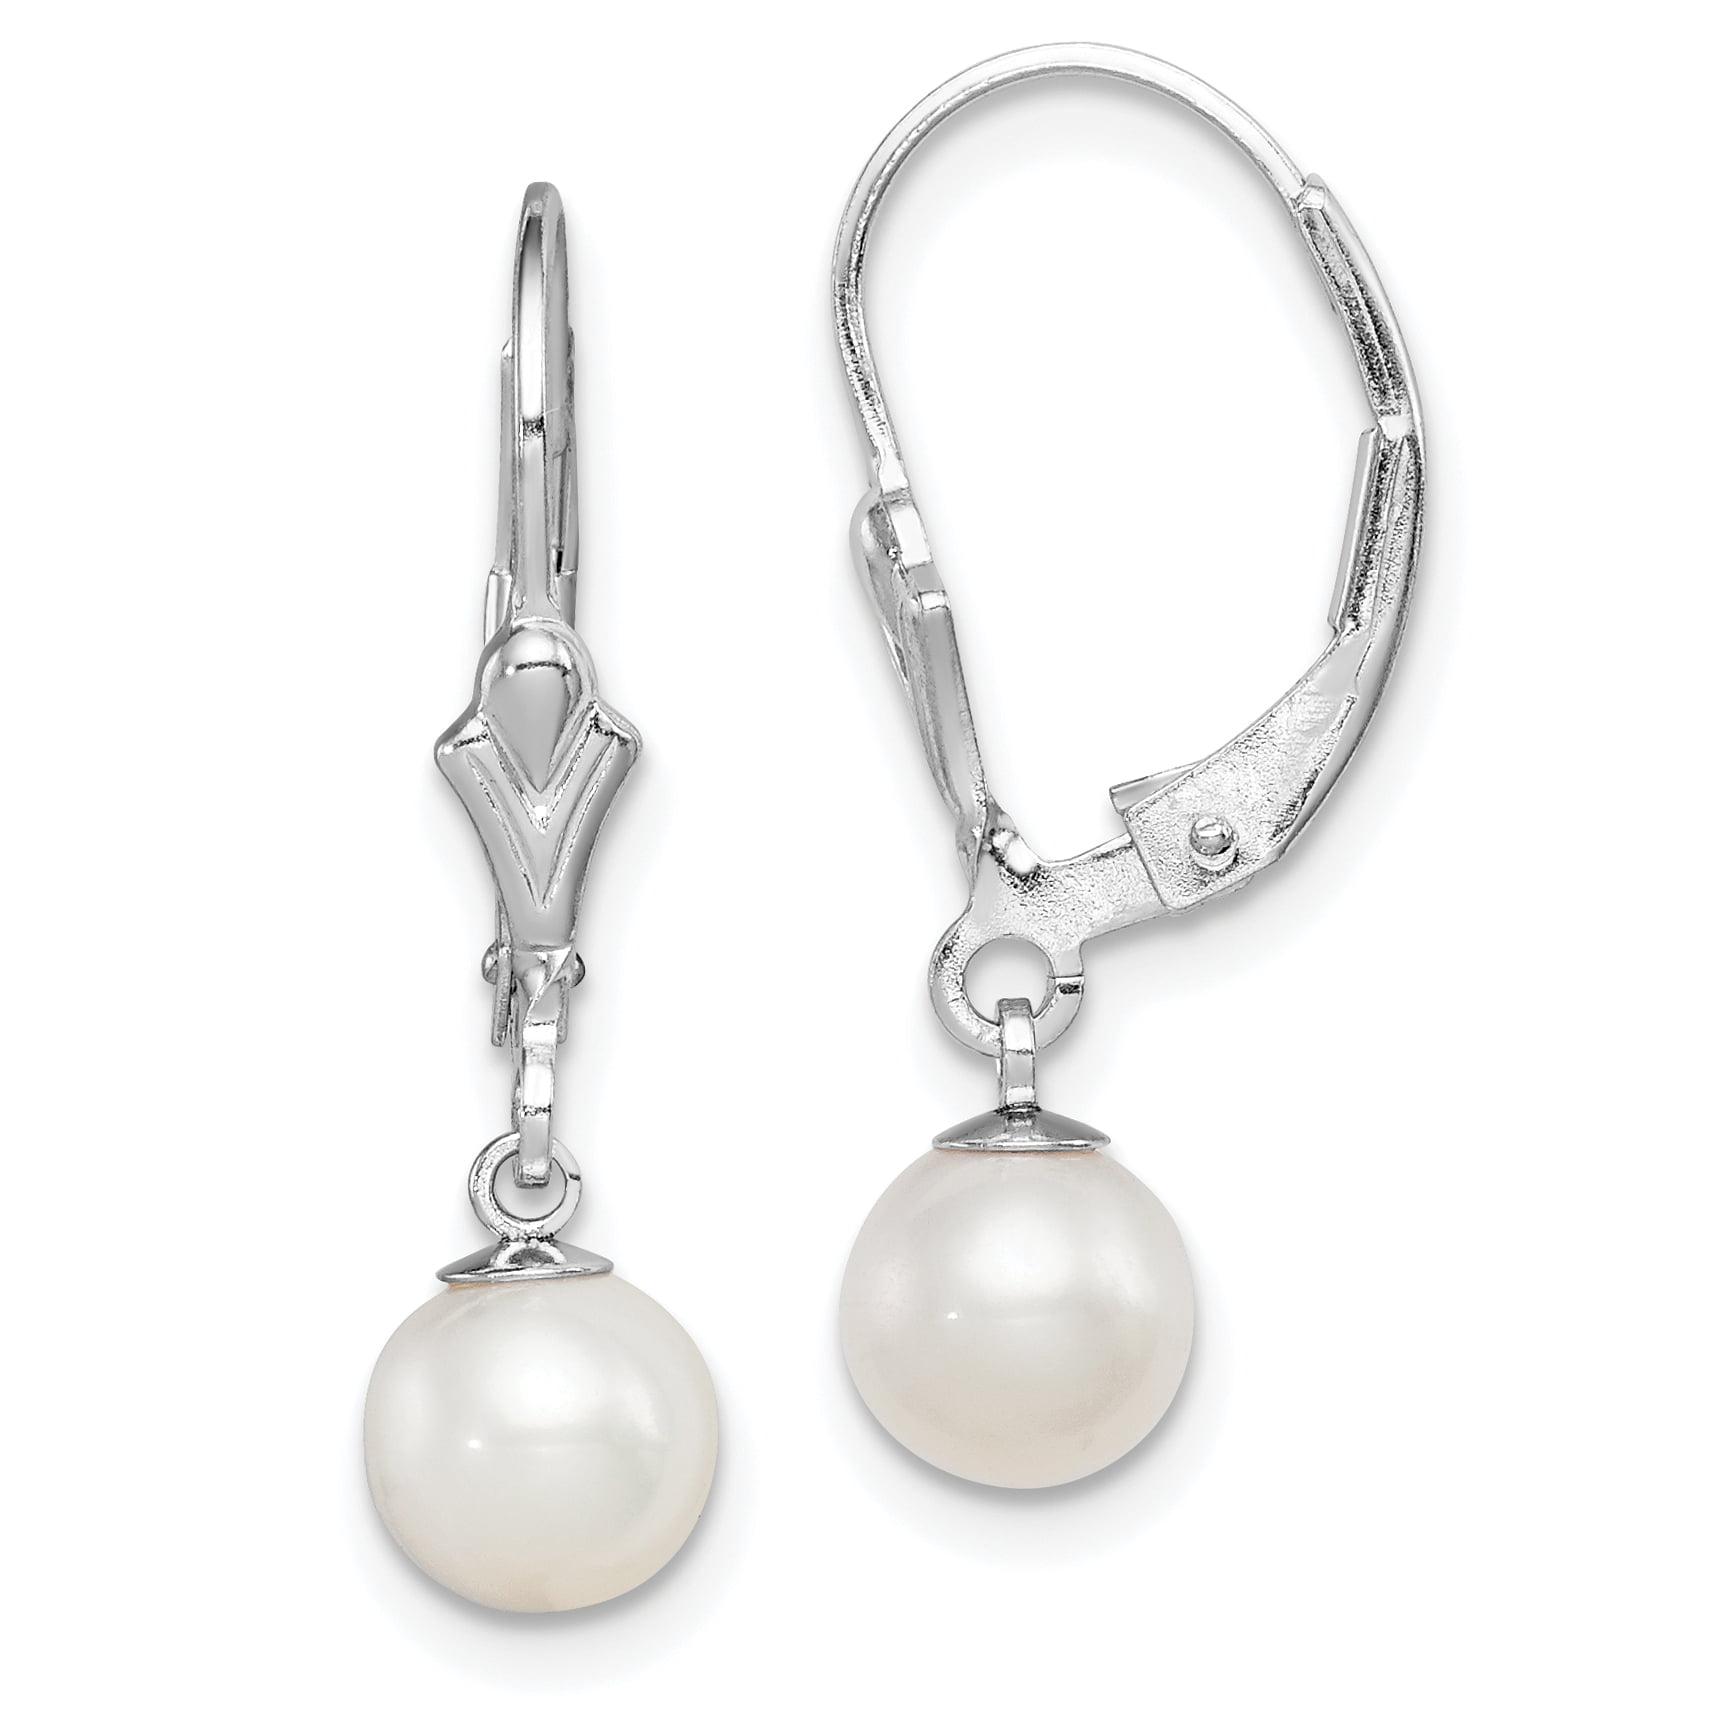 Pattern Pearl Earrings 925 Sterling Silver Earrings Classic Simulated Shell Pearl Stud Earrings 7mm White Round Pearl Studs Bridal Earrings 